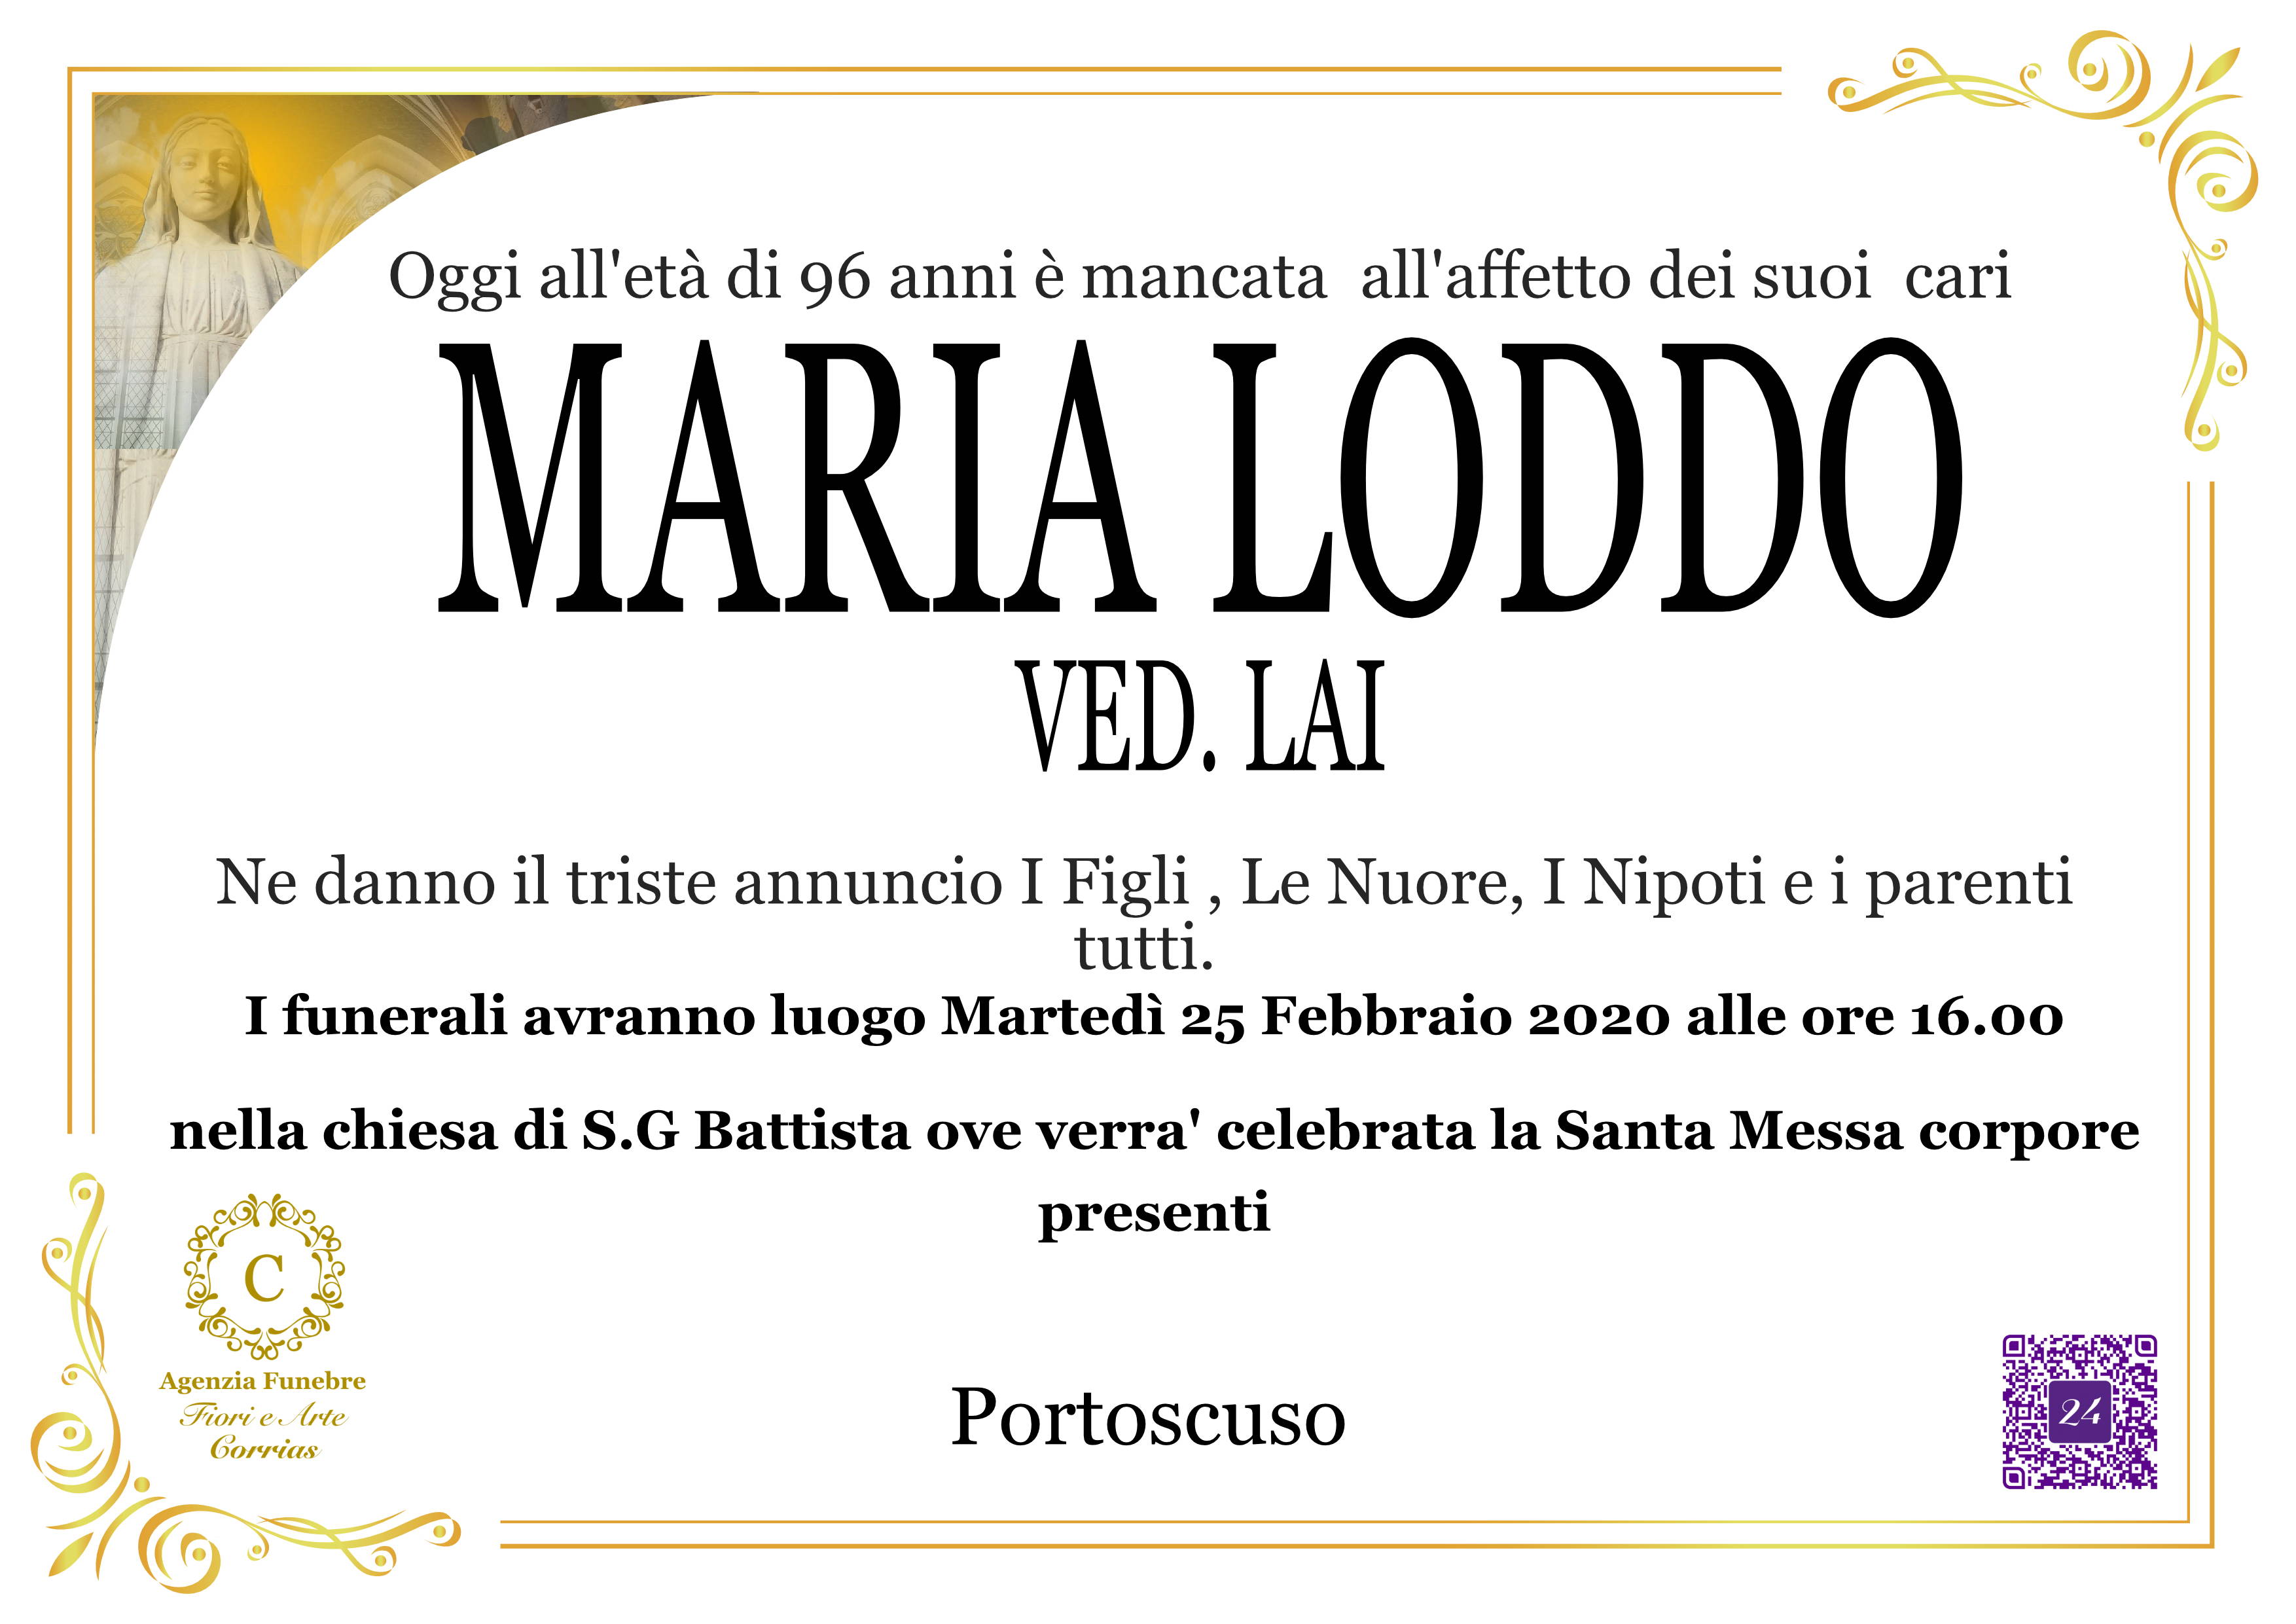 Maria Loddo